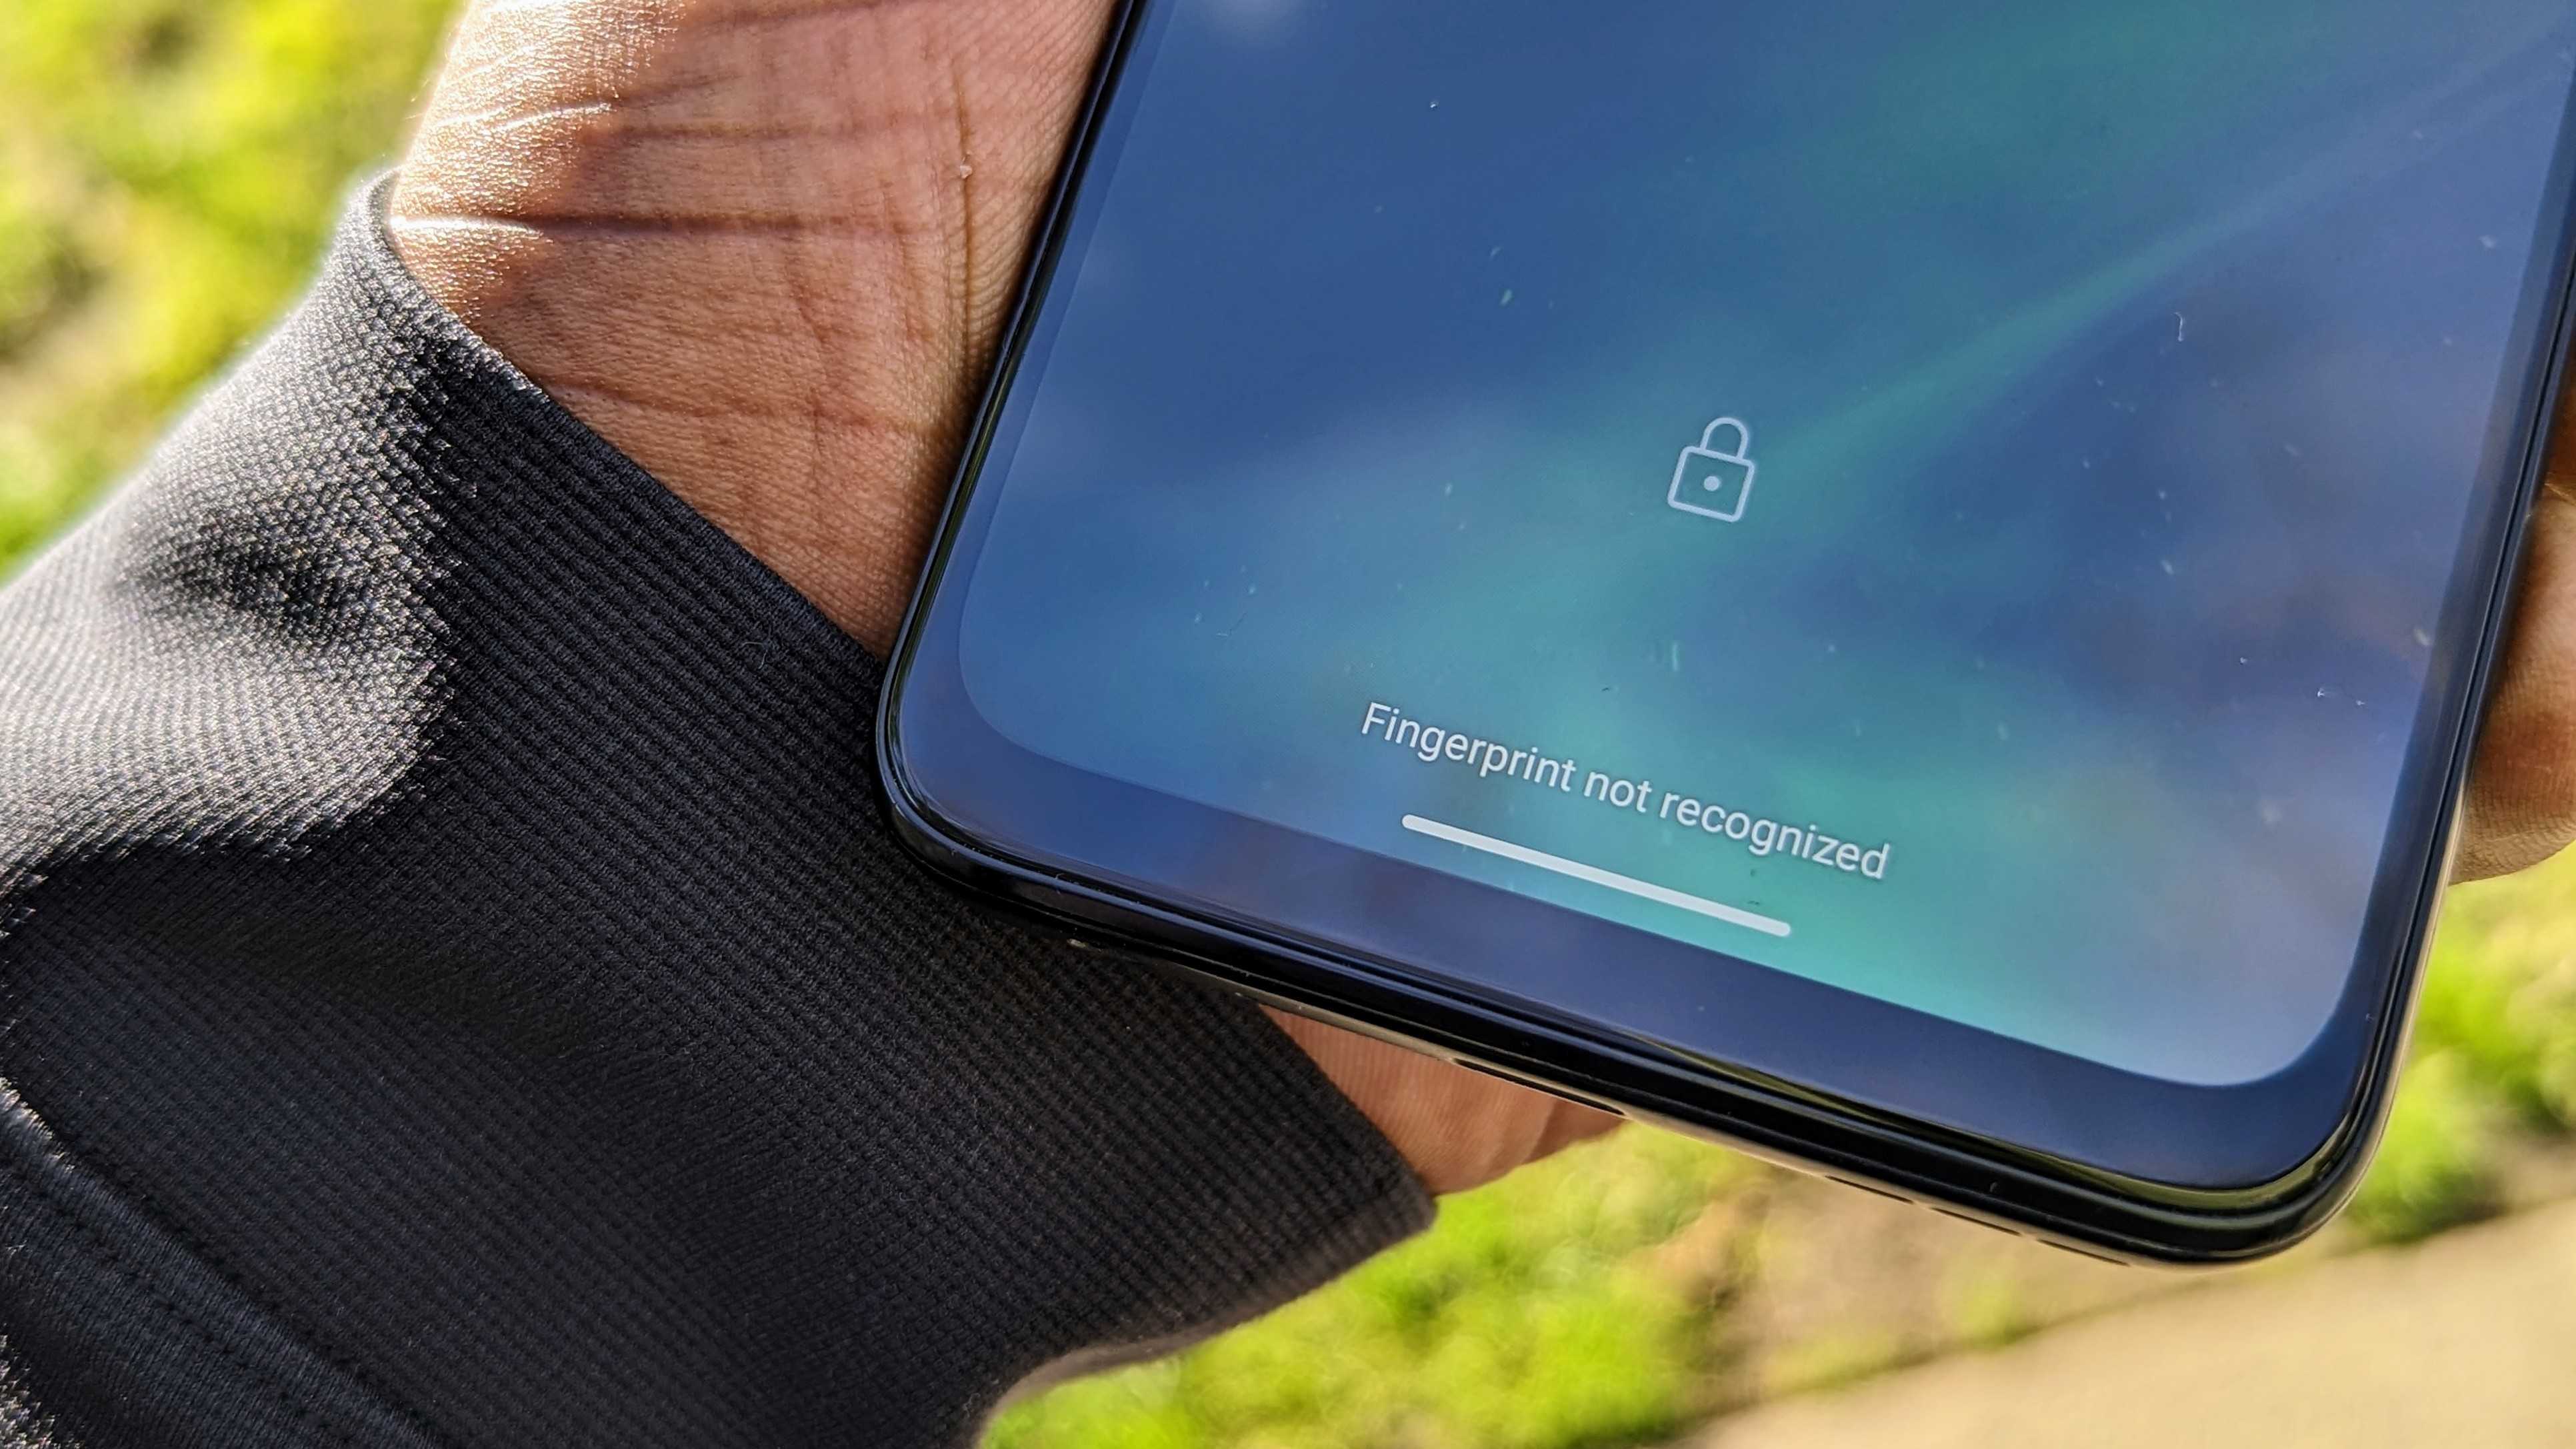 Moto G Power 5G notice of an unrecognized fingerprint